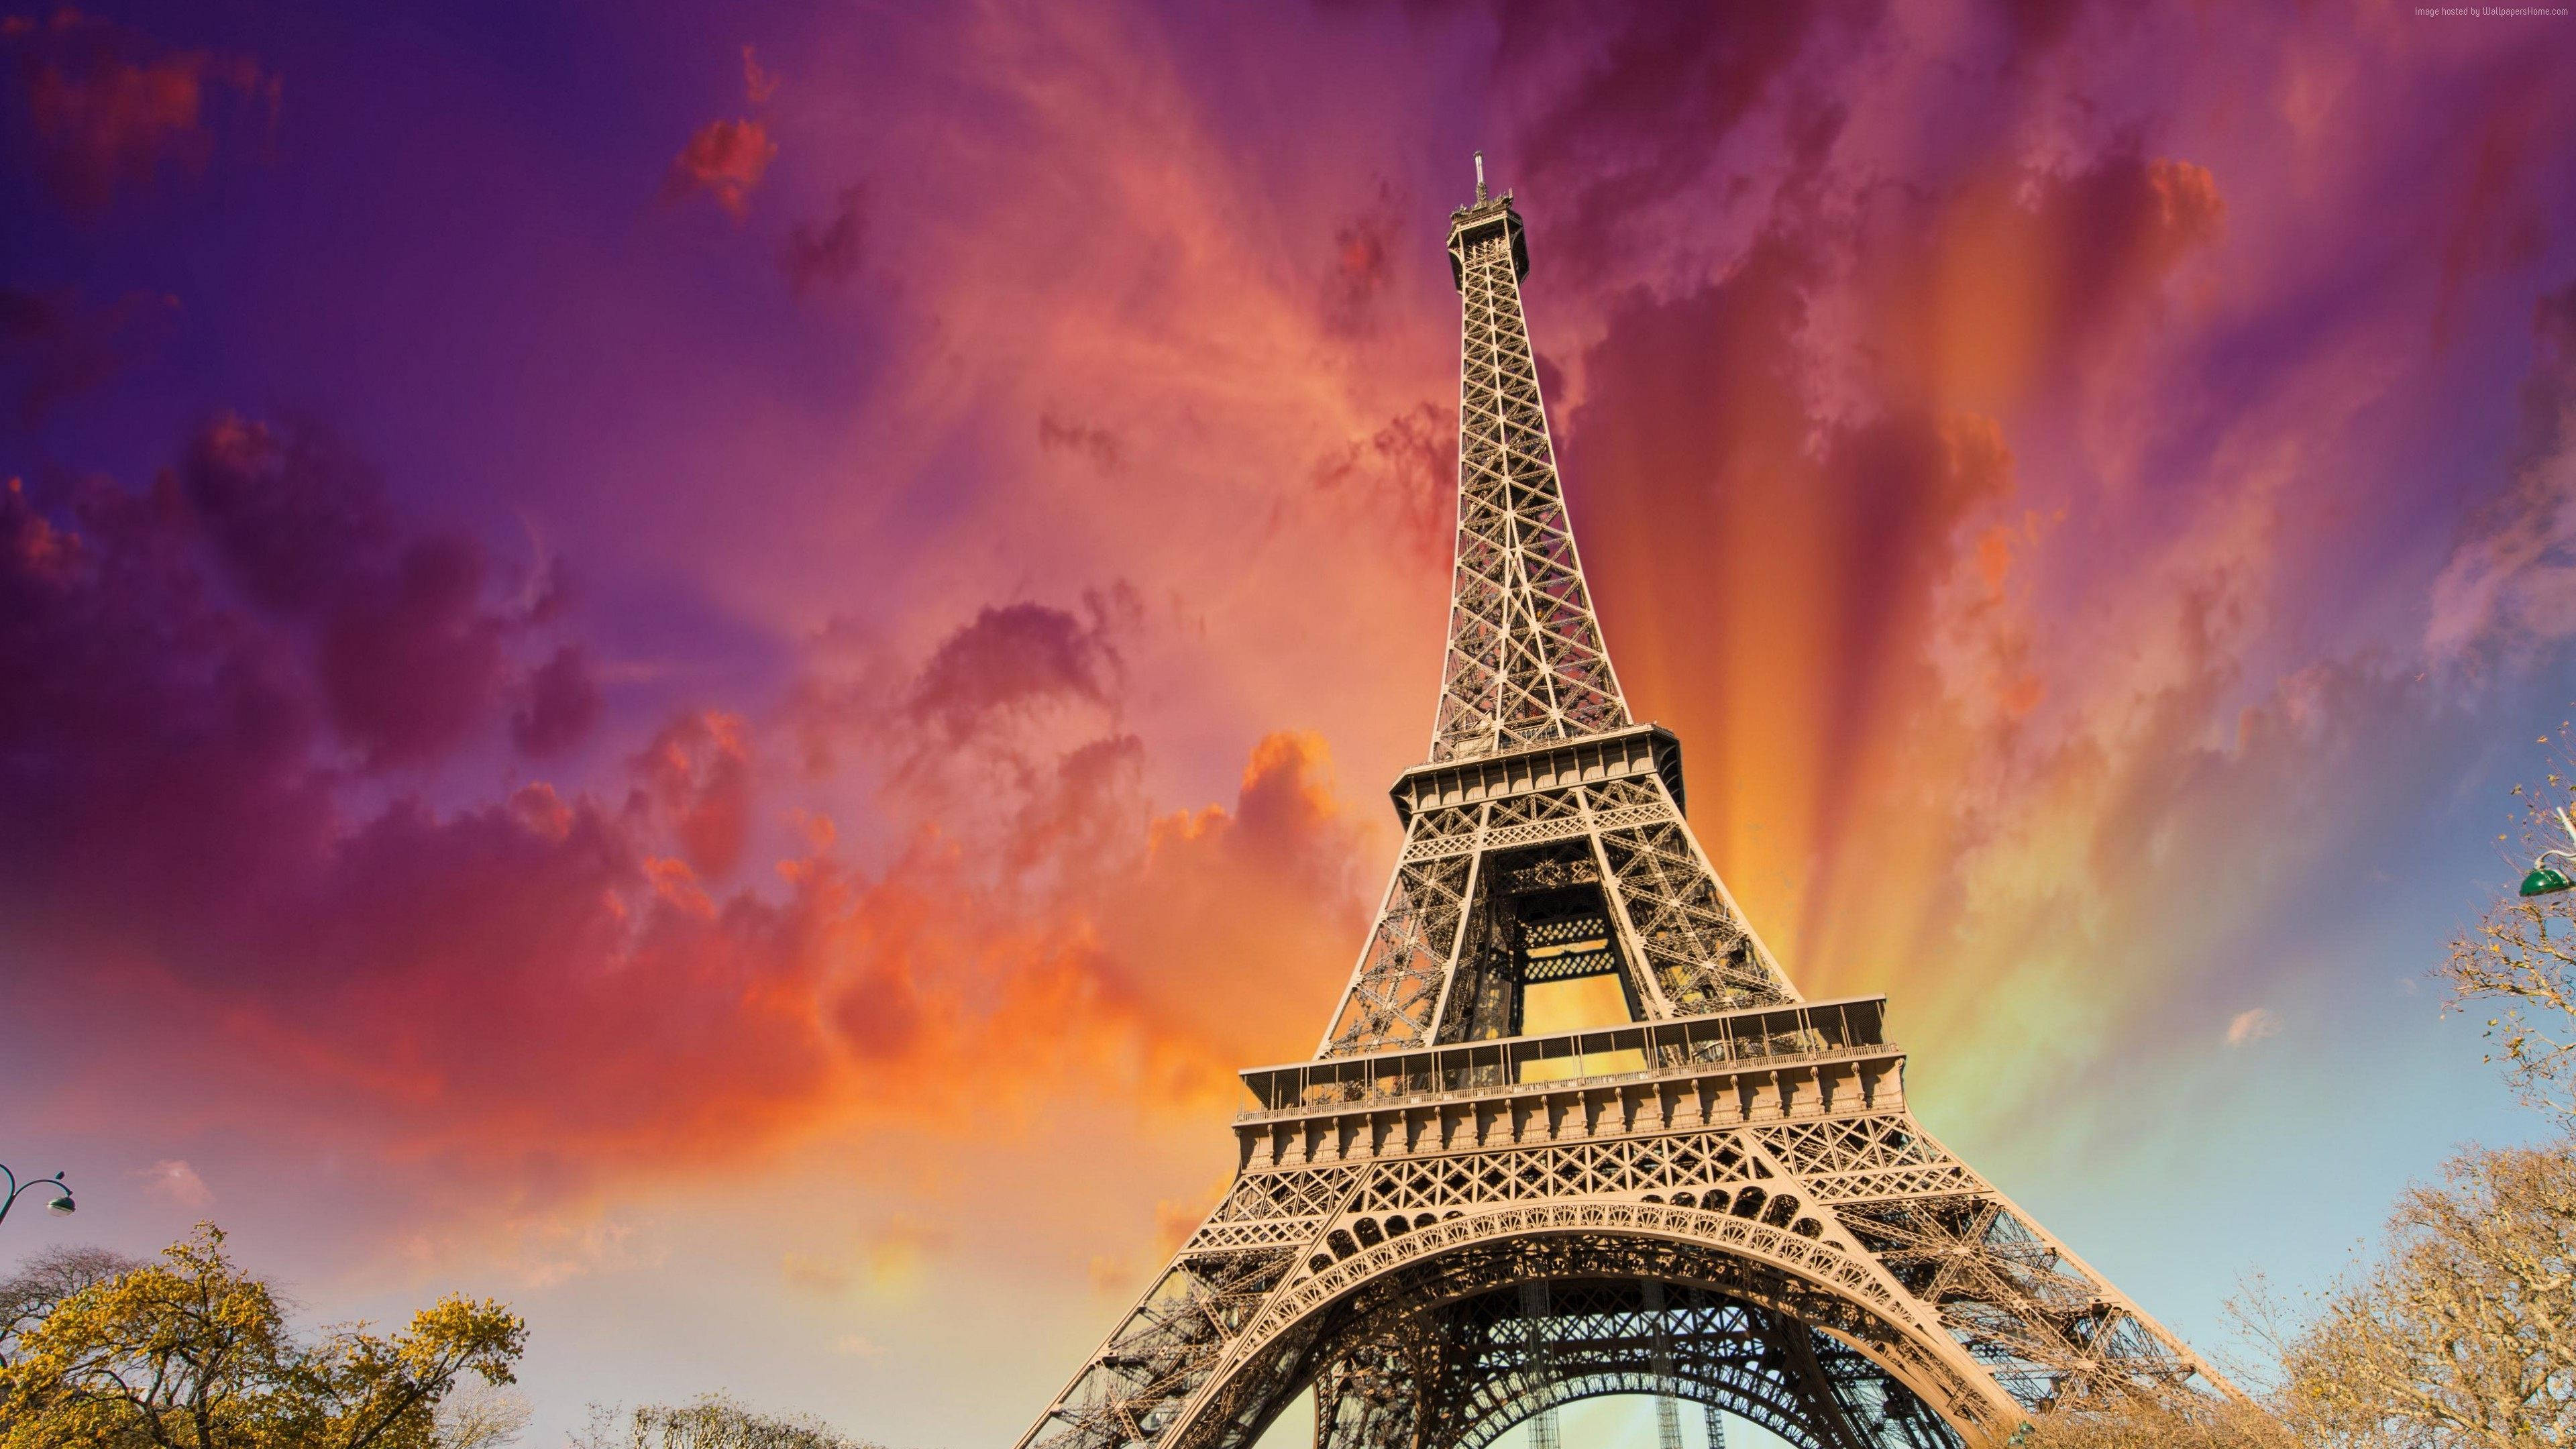 Eiffel Tower wallpaper - 1920x1080 download free beautiful wallpapers for desktop, 1920x1080 - 1920x1080 - The Eiffel Tower wallpaper - Eiffel Tower